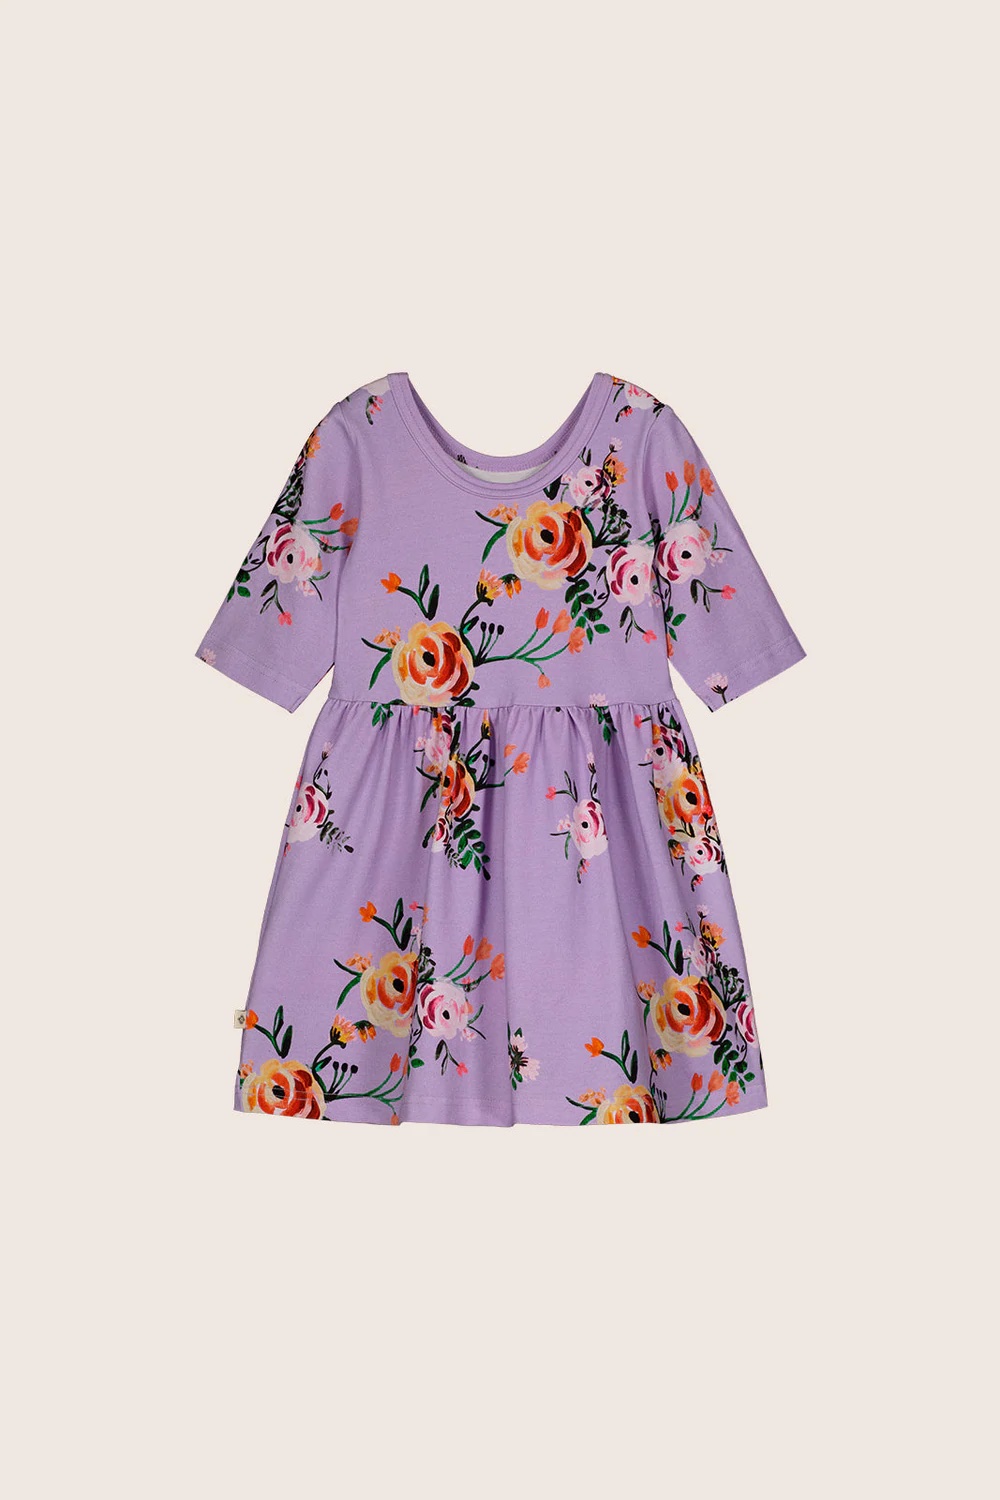 KAIKO - Kids Dress 3/4 - Lavender Bloom 4